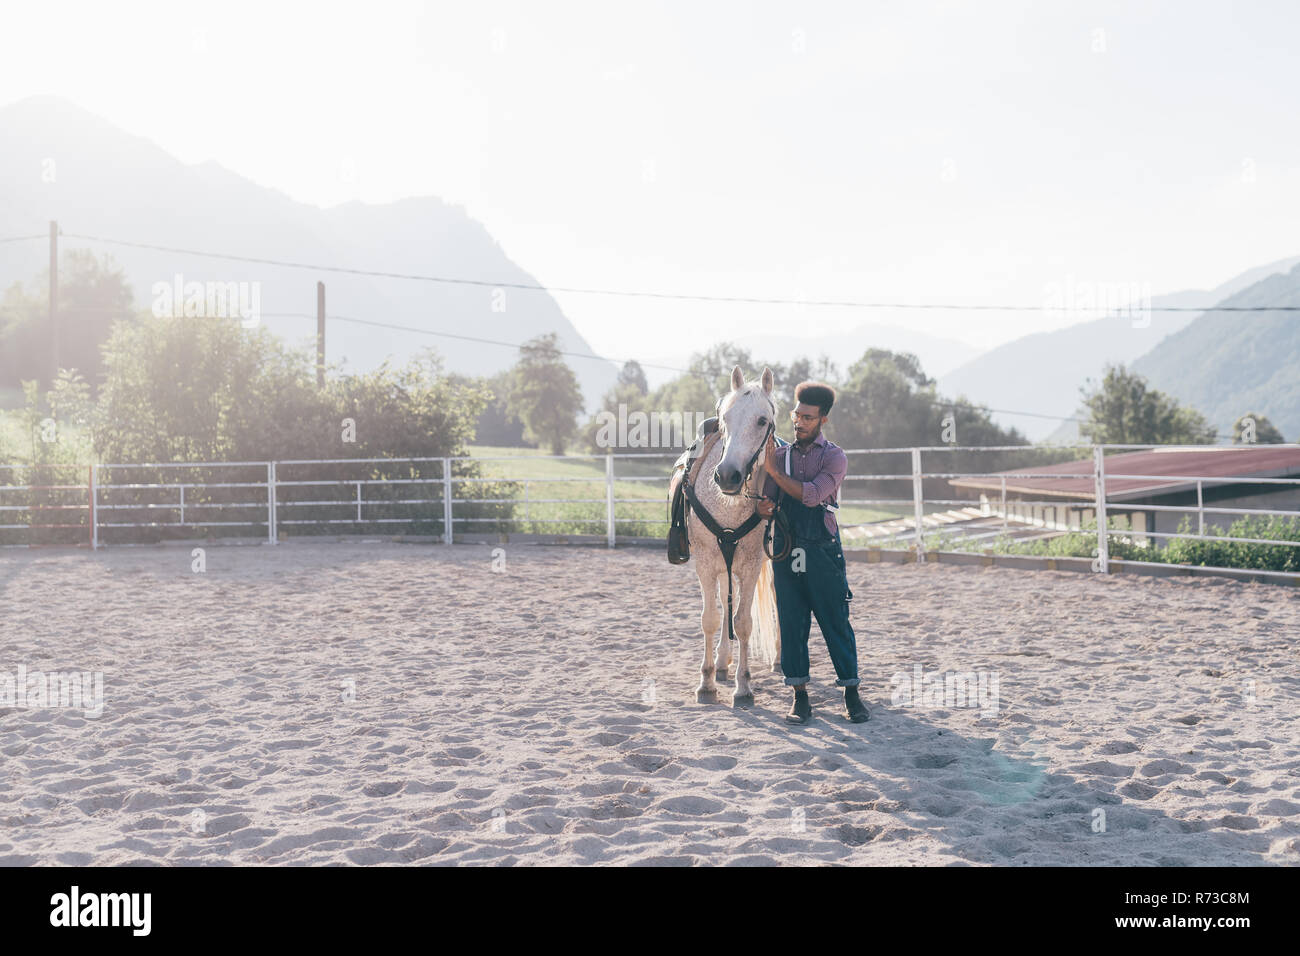 Young man bonding with horse in rural equestrian arena, Primaluna, Trentino-Alto Adige, Italy Stock Photo